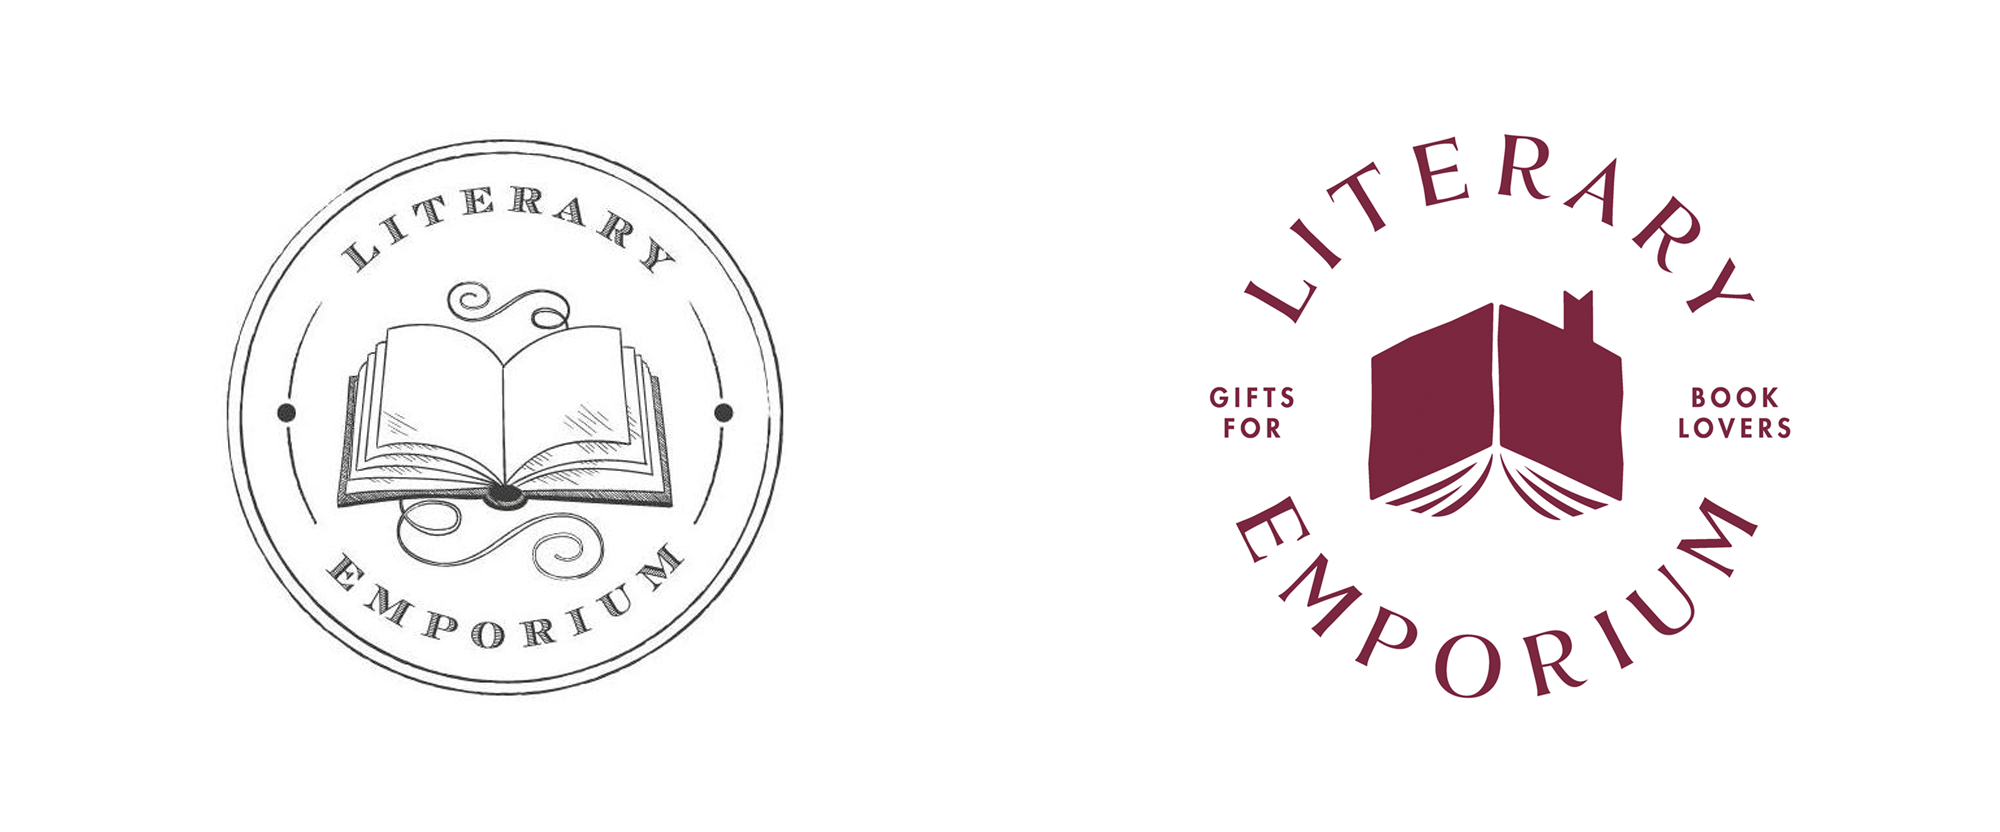 New Logo and Identity for Literary Emporium by Fiasco Design